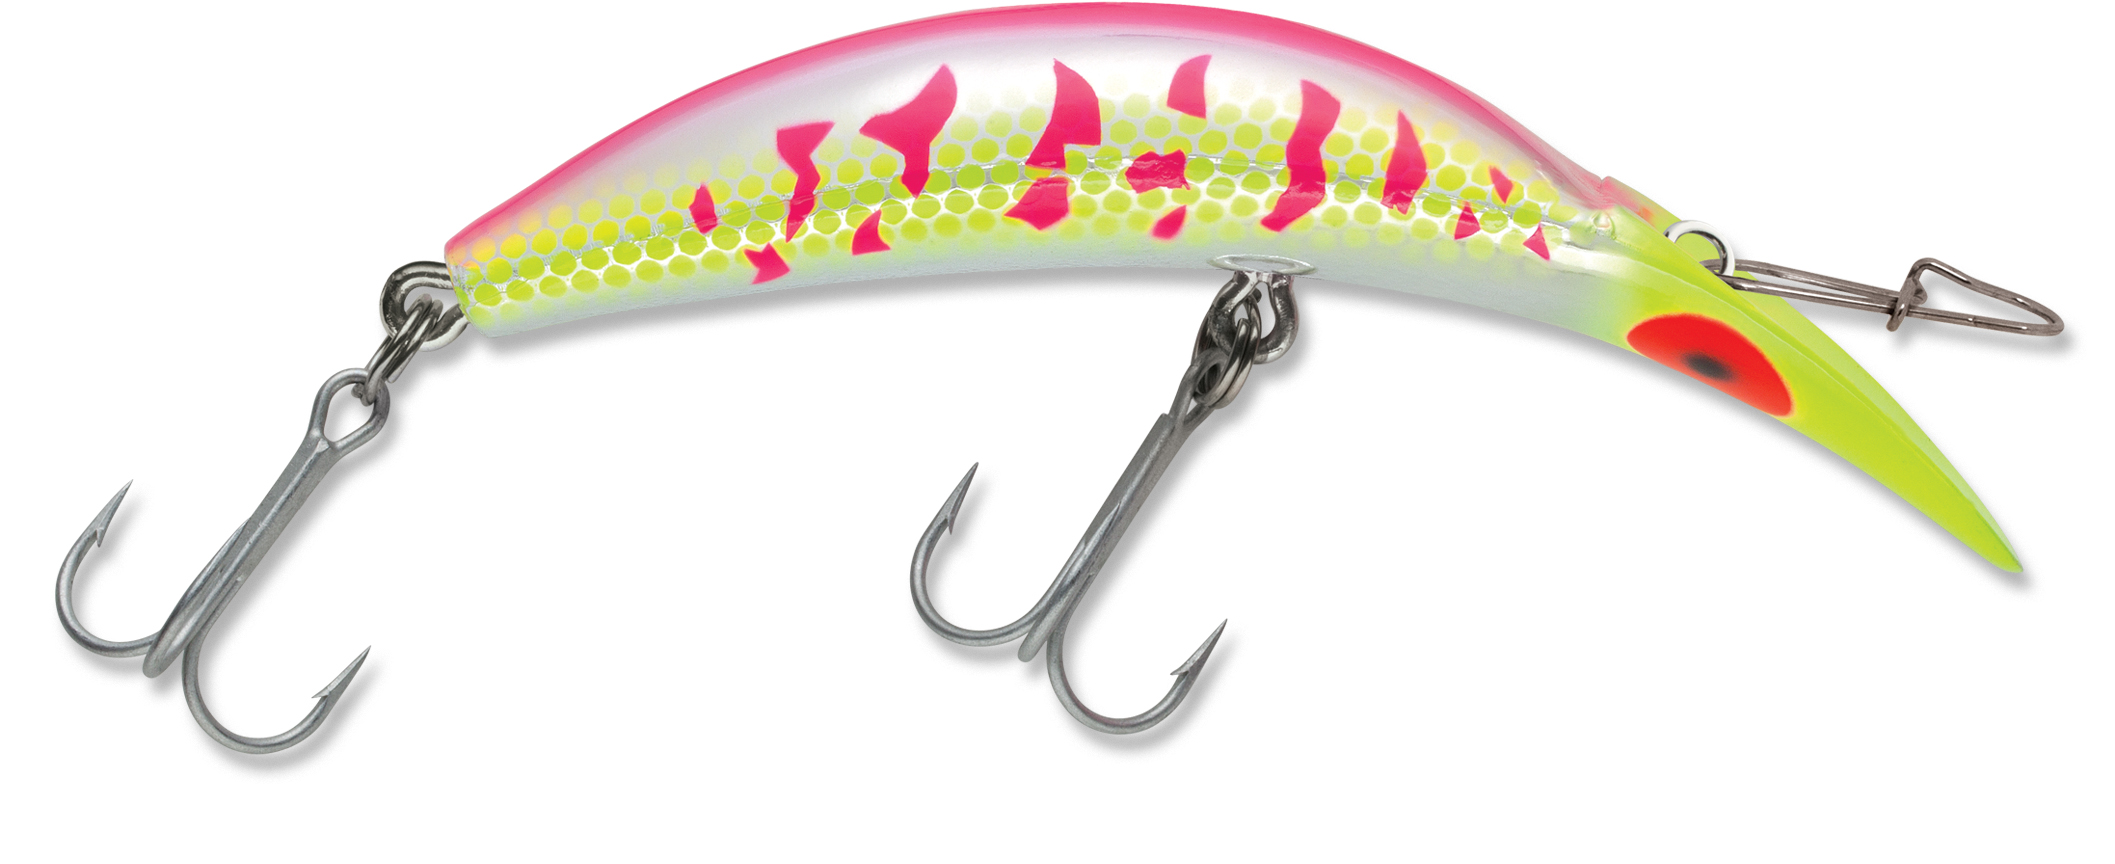 Luhr-Jensen Kwikfish K14 (Rattle) - Blazin' Pink UV - Precision Fishing